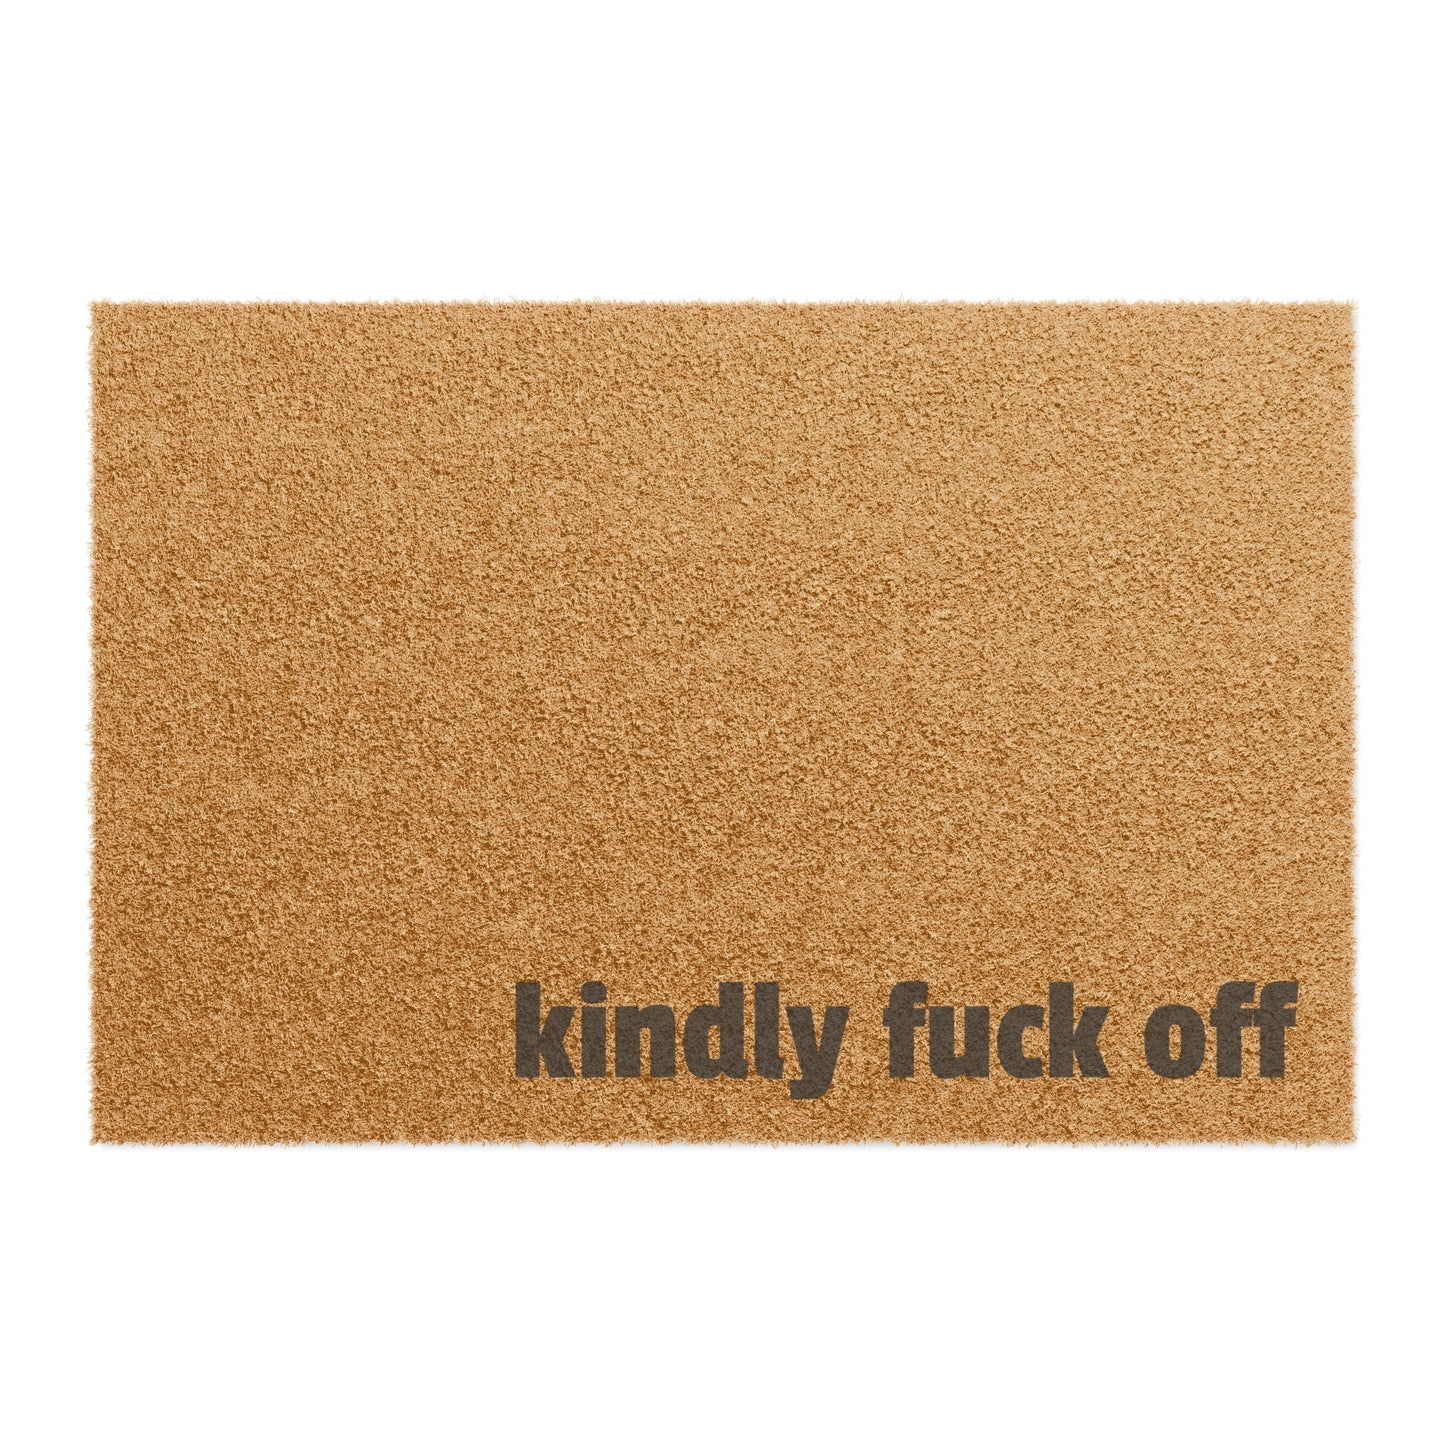 Kindly Fuck Off Doormat